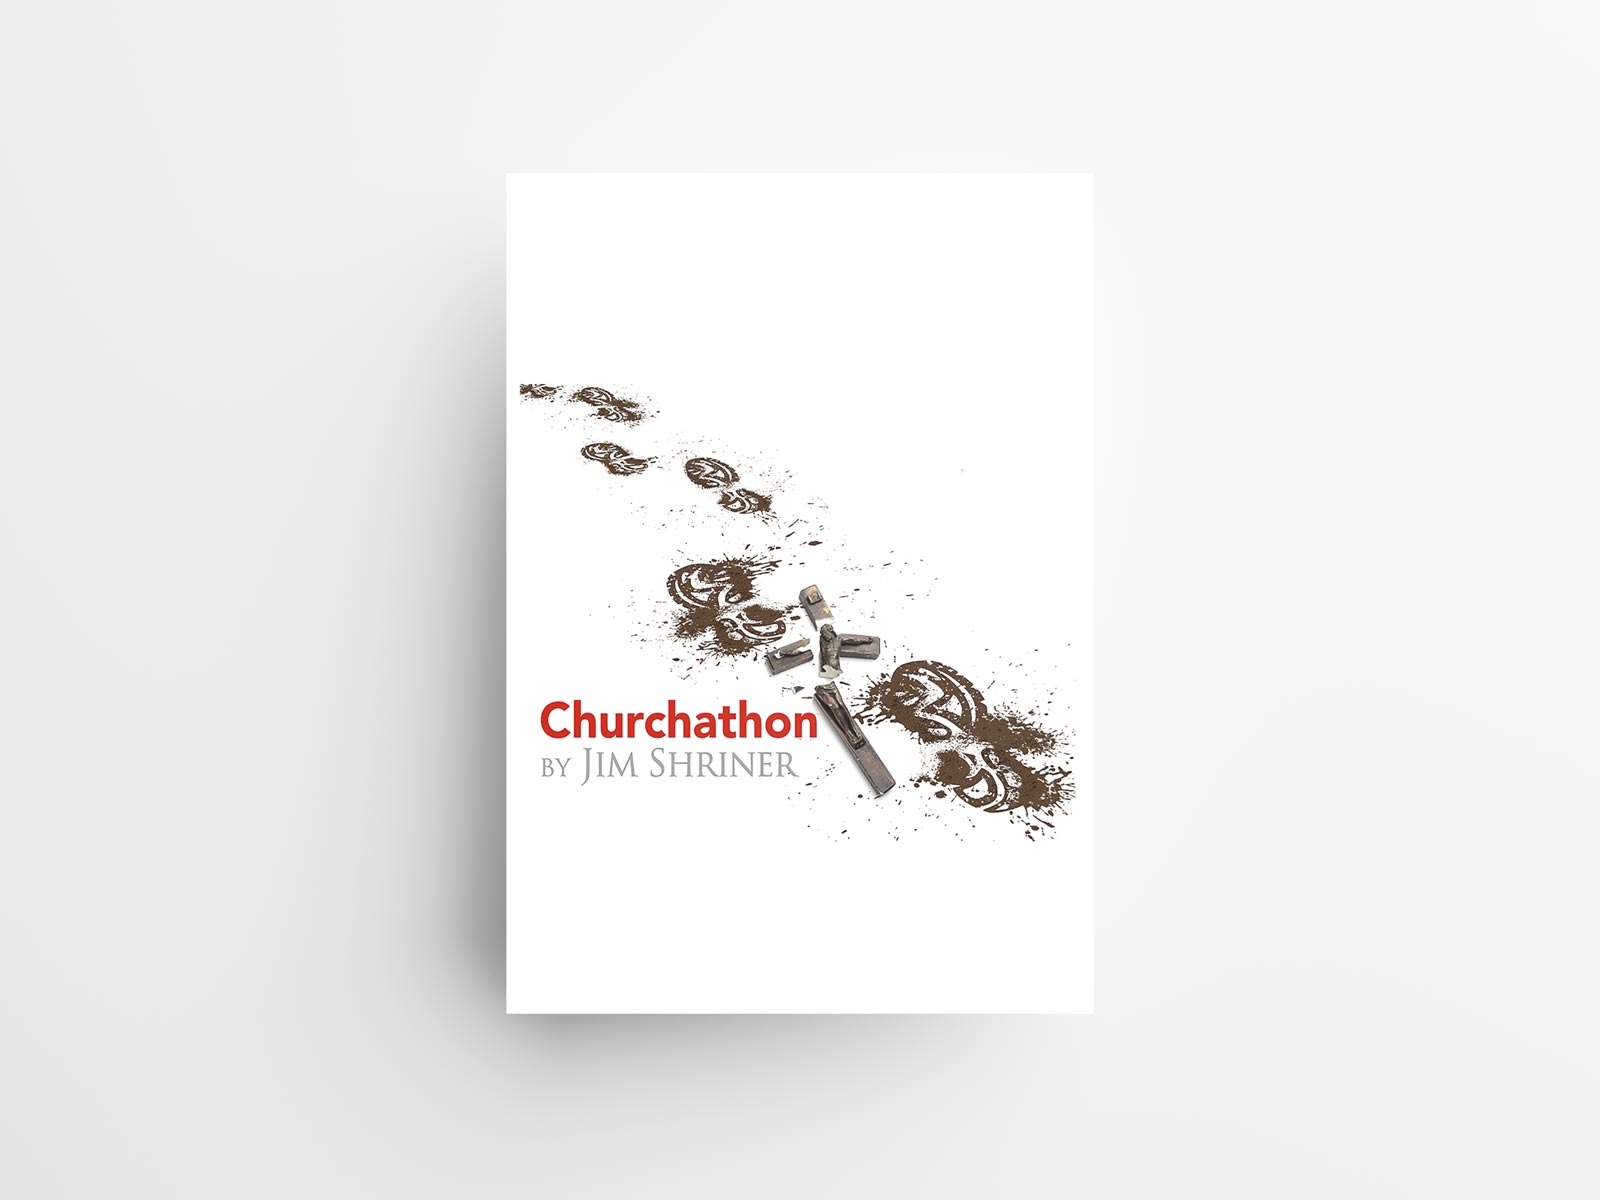 Jim Shriner ``Churchathon`` promotional image